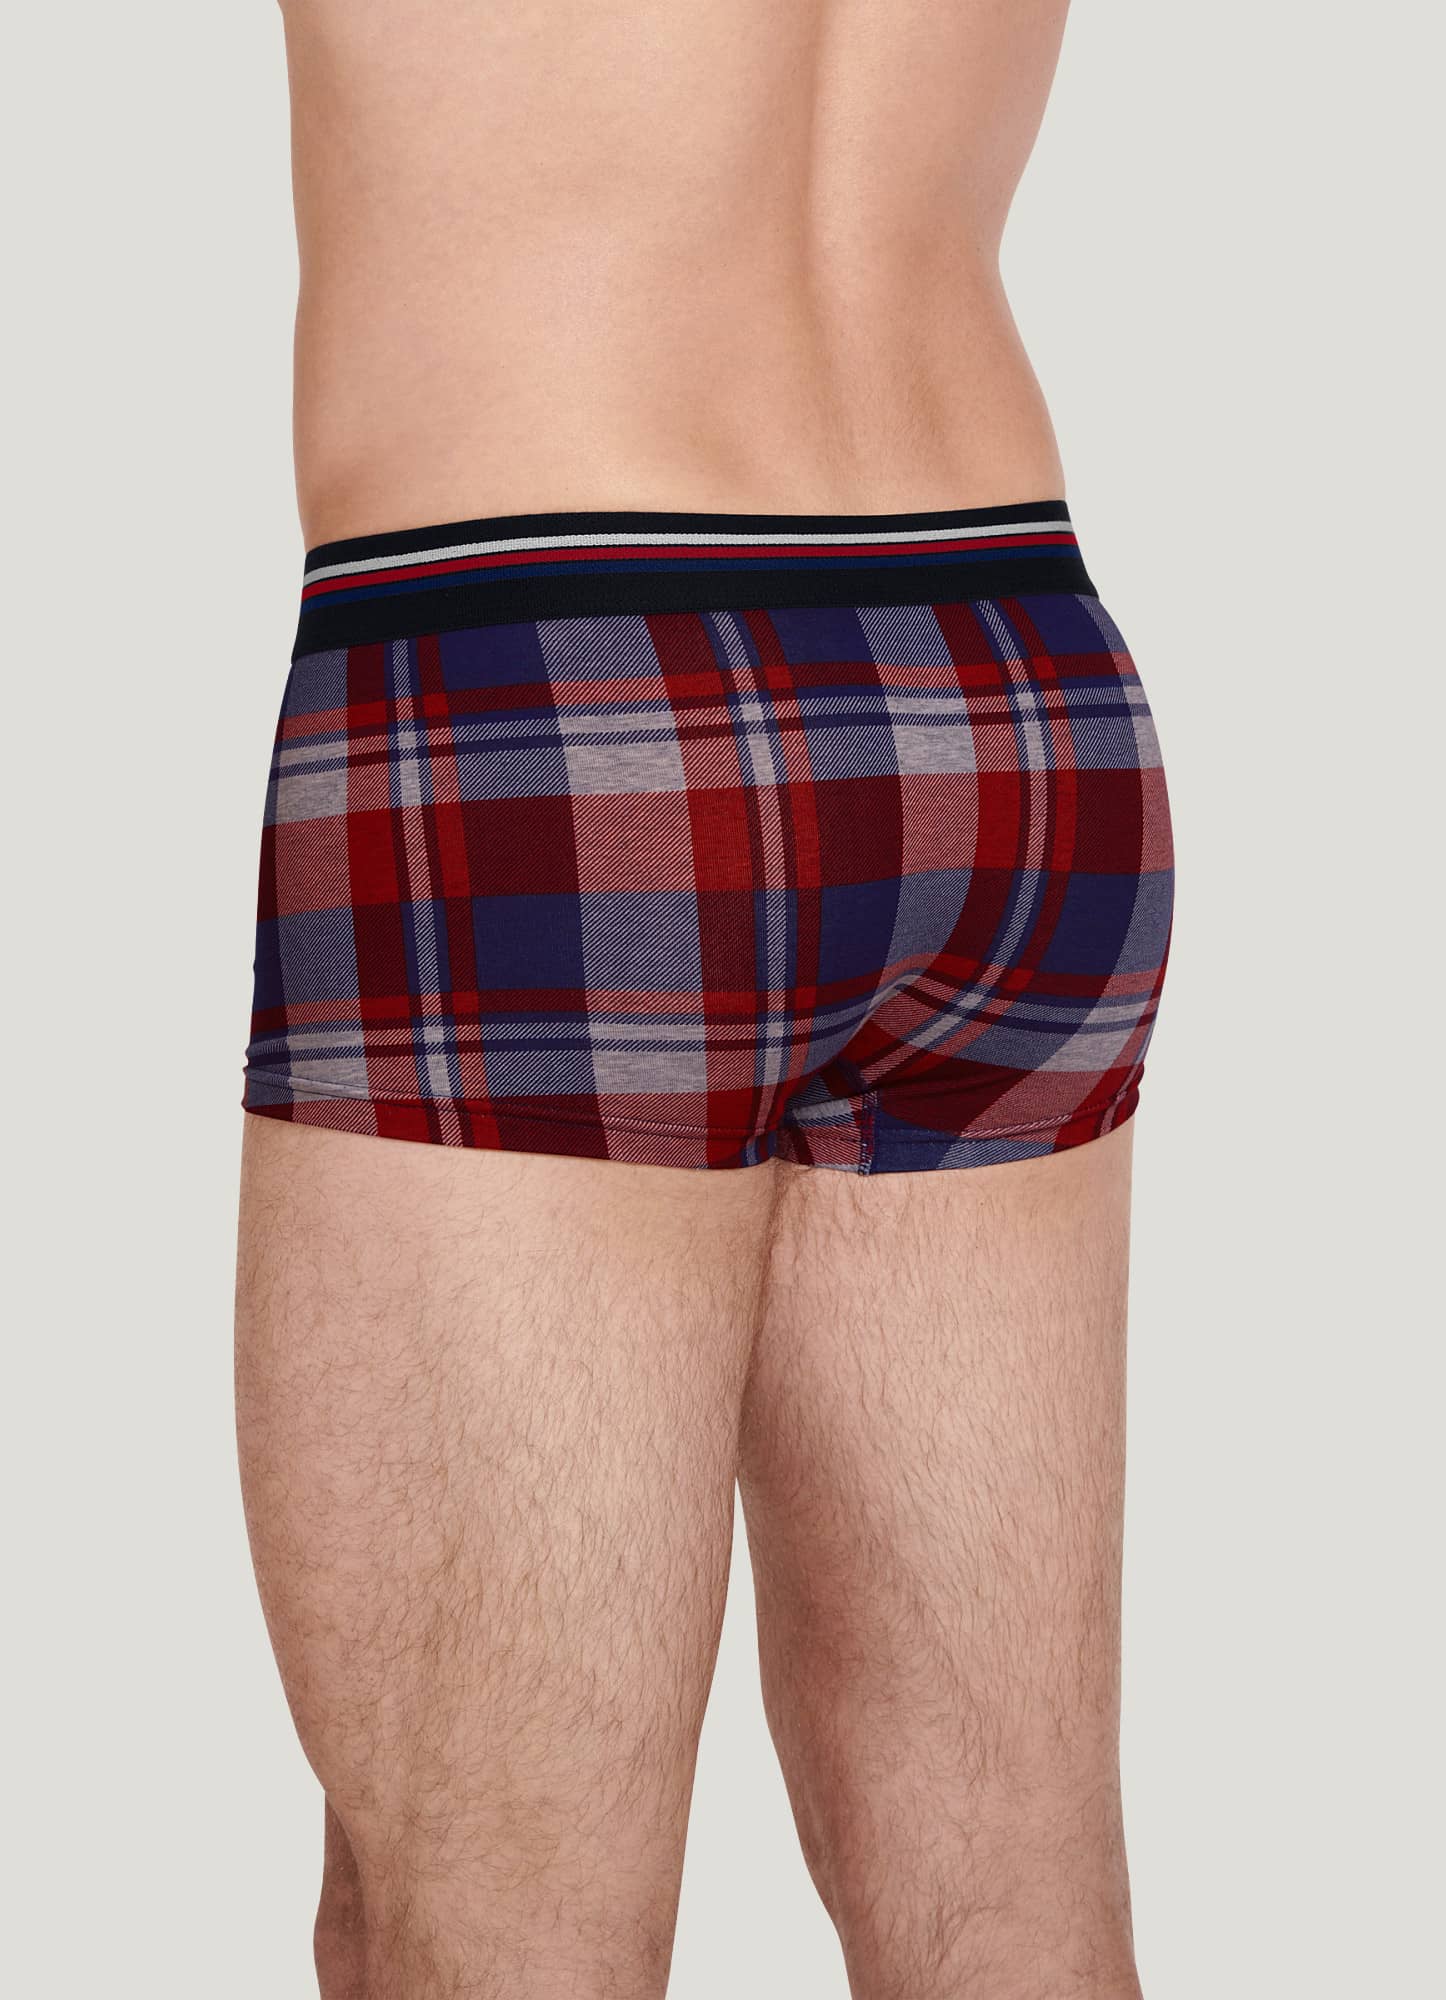 Target Dart Men'S Underwear Boxer Briefs Soft Stretch Trunks Shorts at   Men's Clothing store